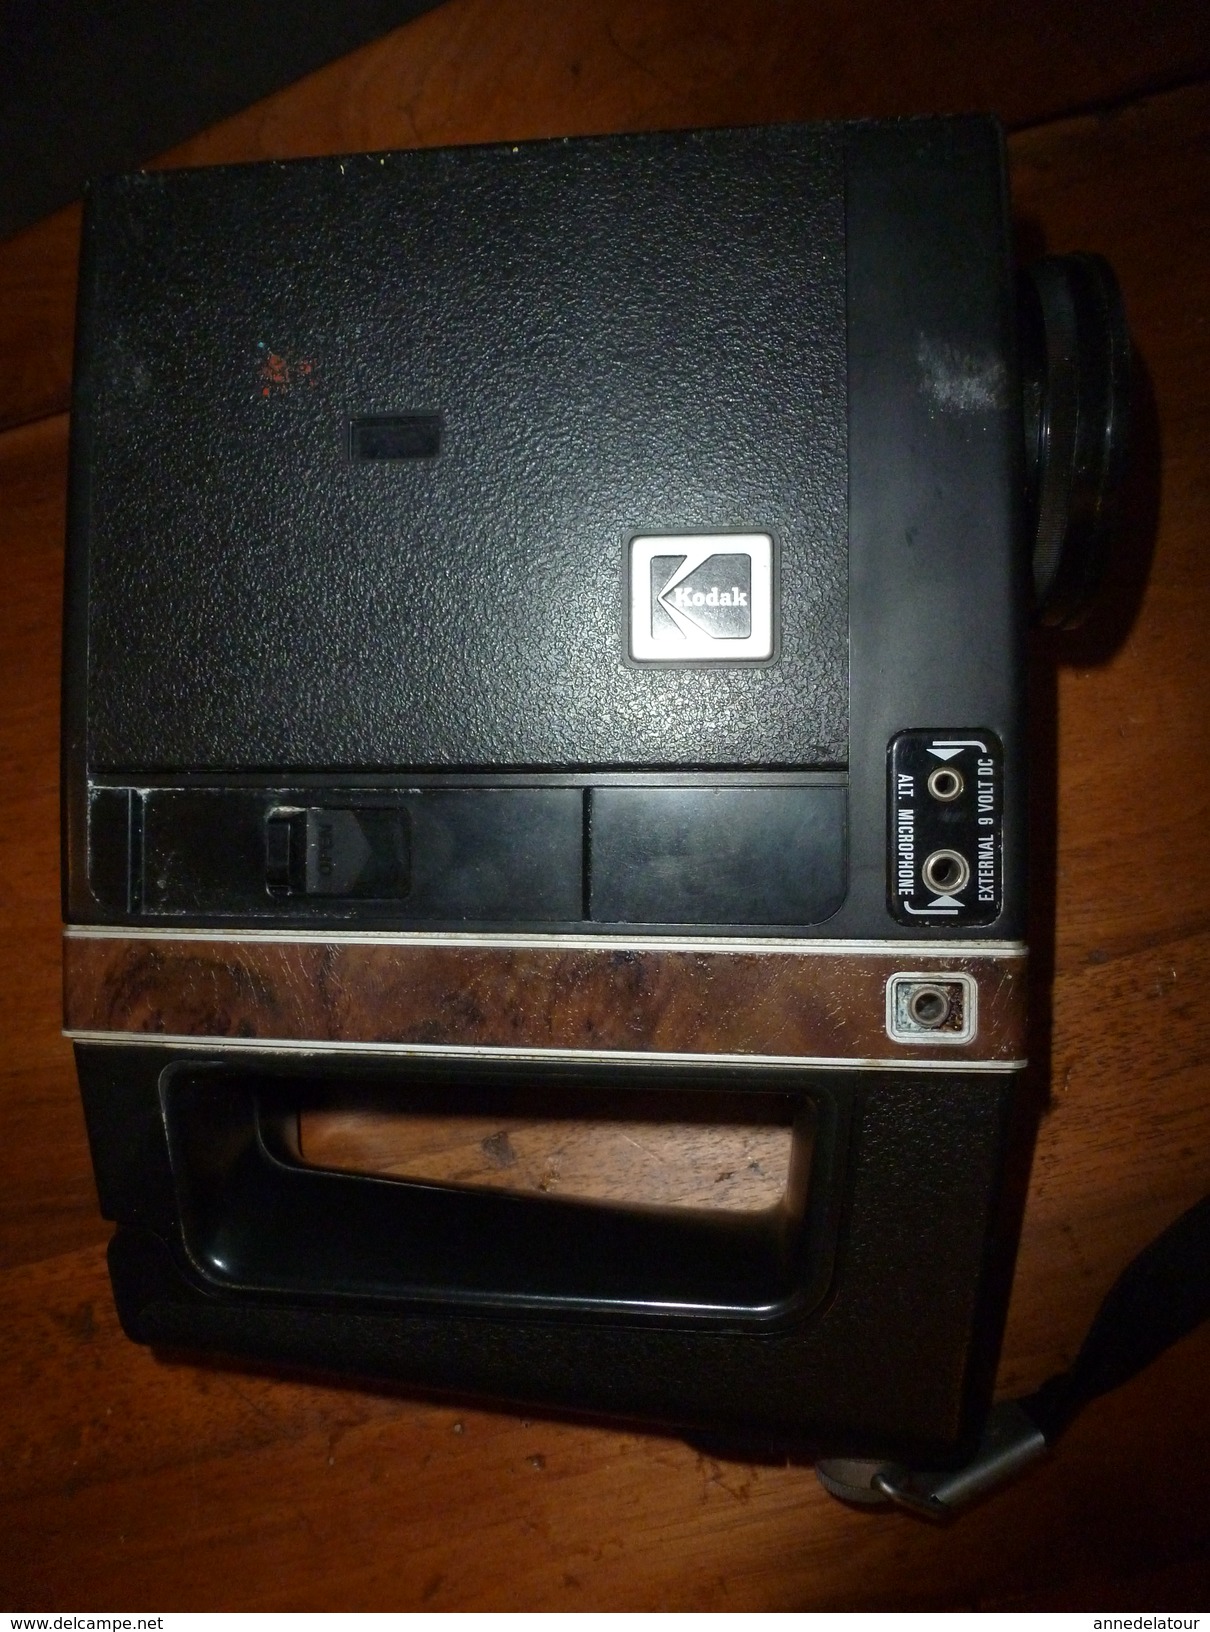 KODAK EKTASOUND 130 movie caméra :  avec notice et boite d'origine  (année de fabrication probable, vers 1973)